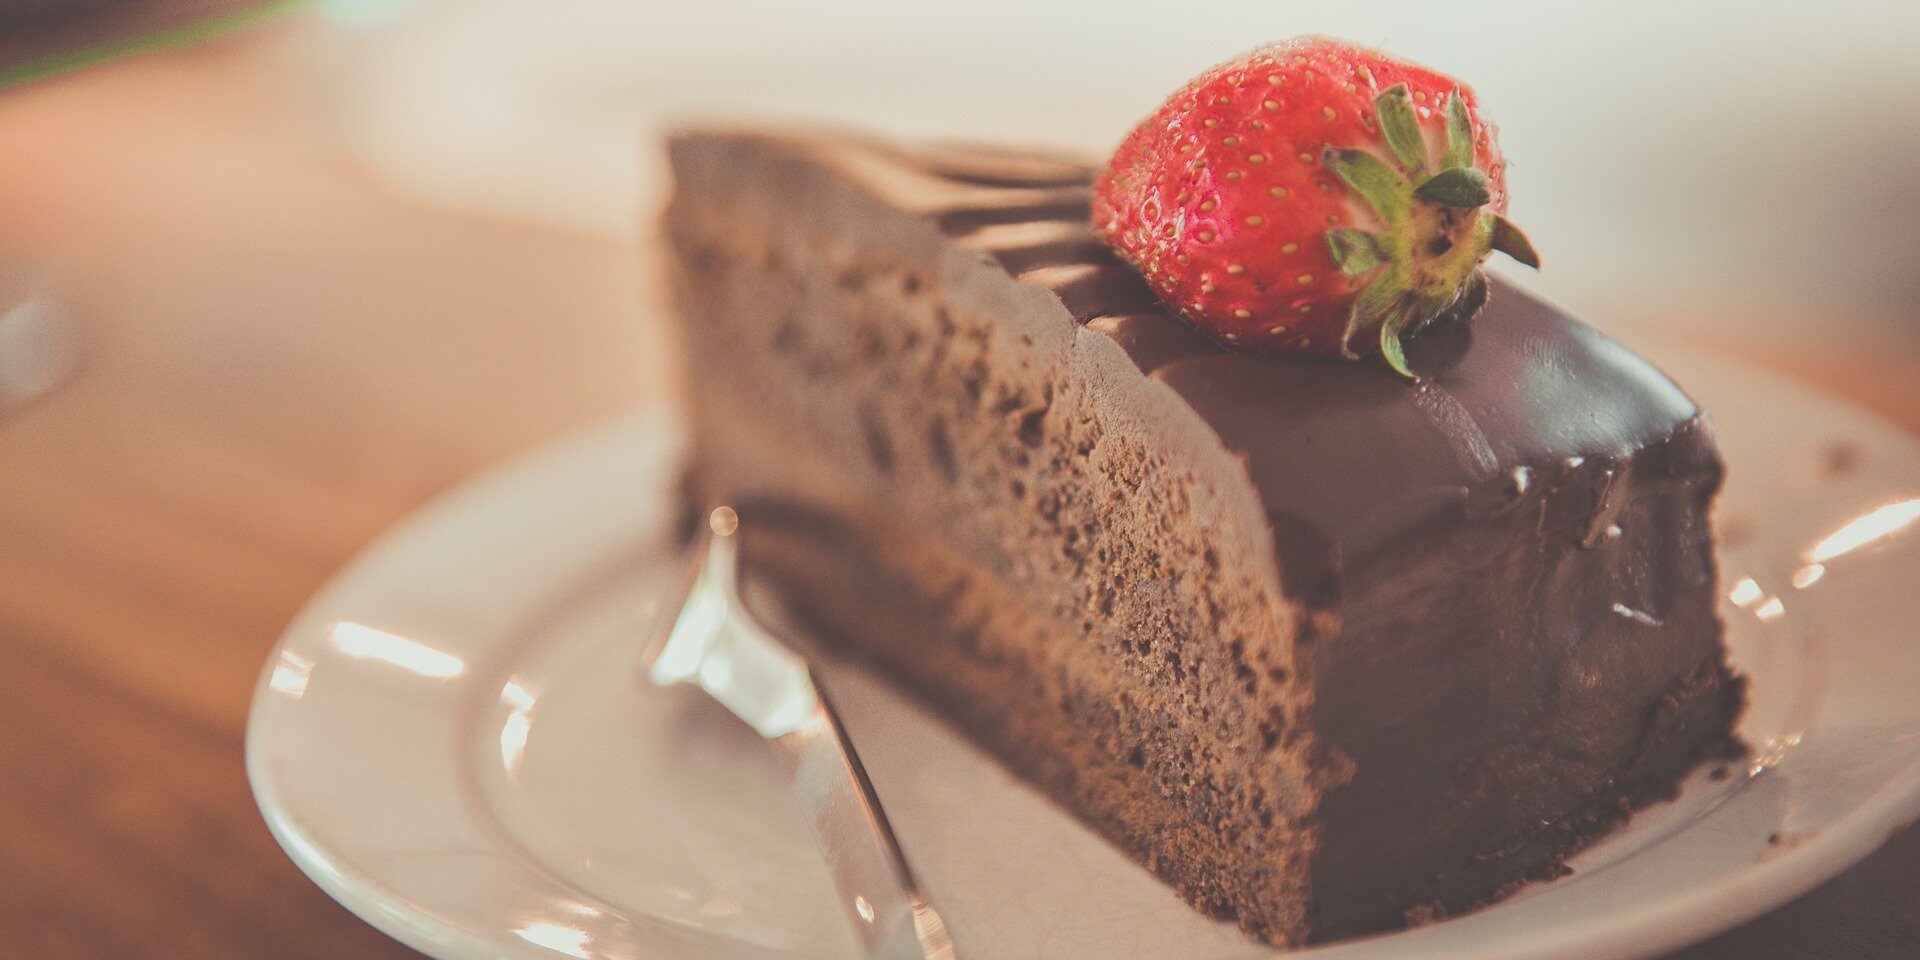 Order Chocolate Cake Online | Latest Design Chocolate Flavor Cakes